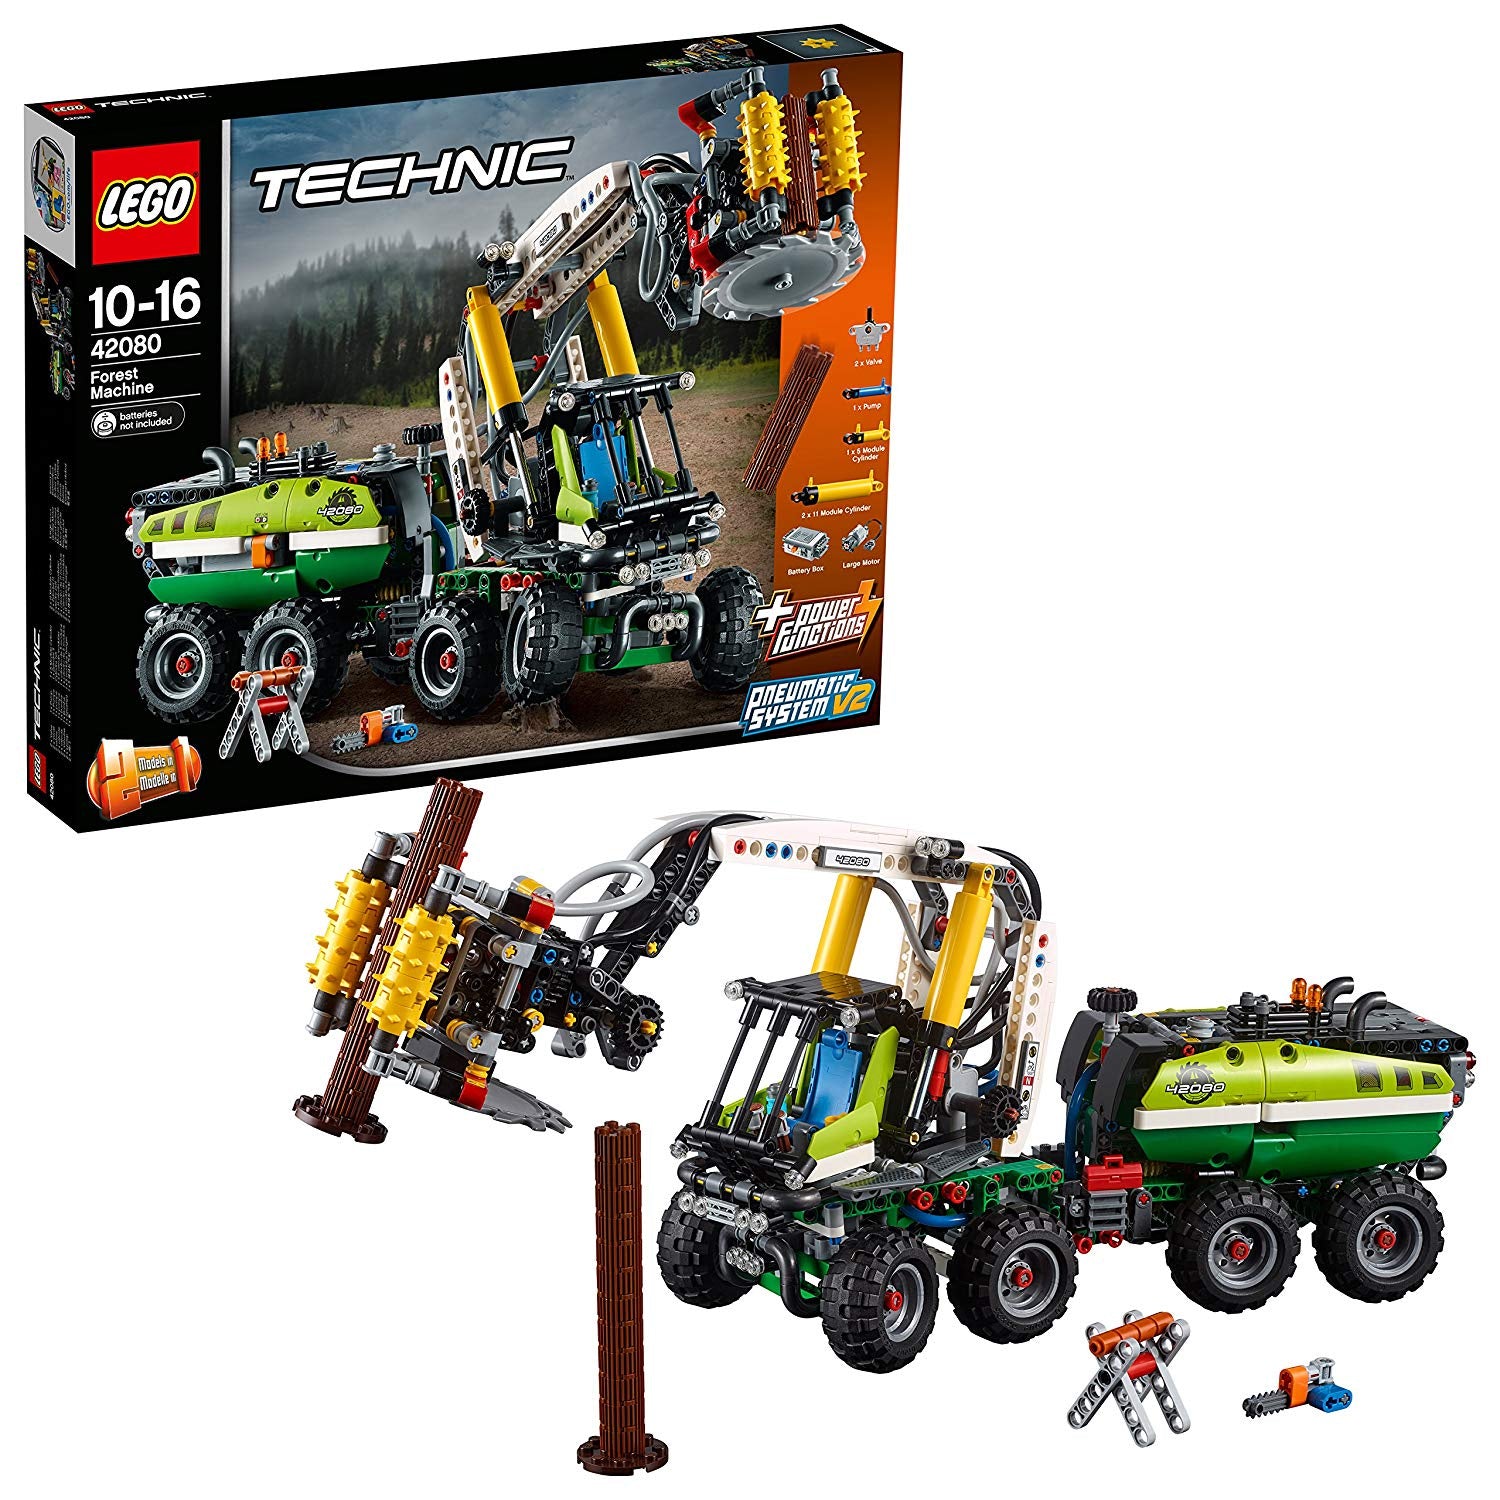 Lego Technic: Forest Machine 42080